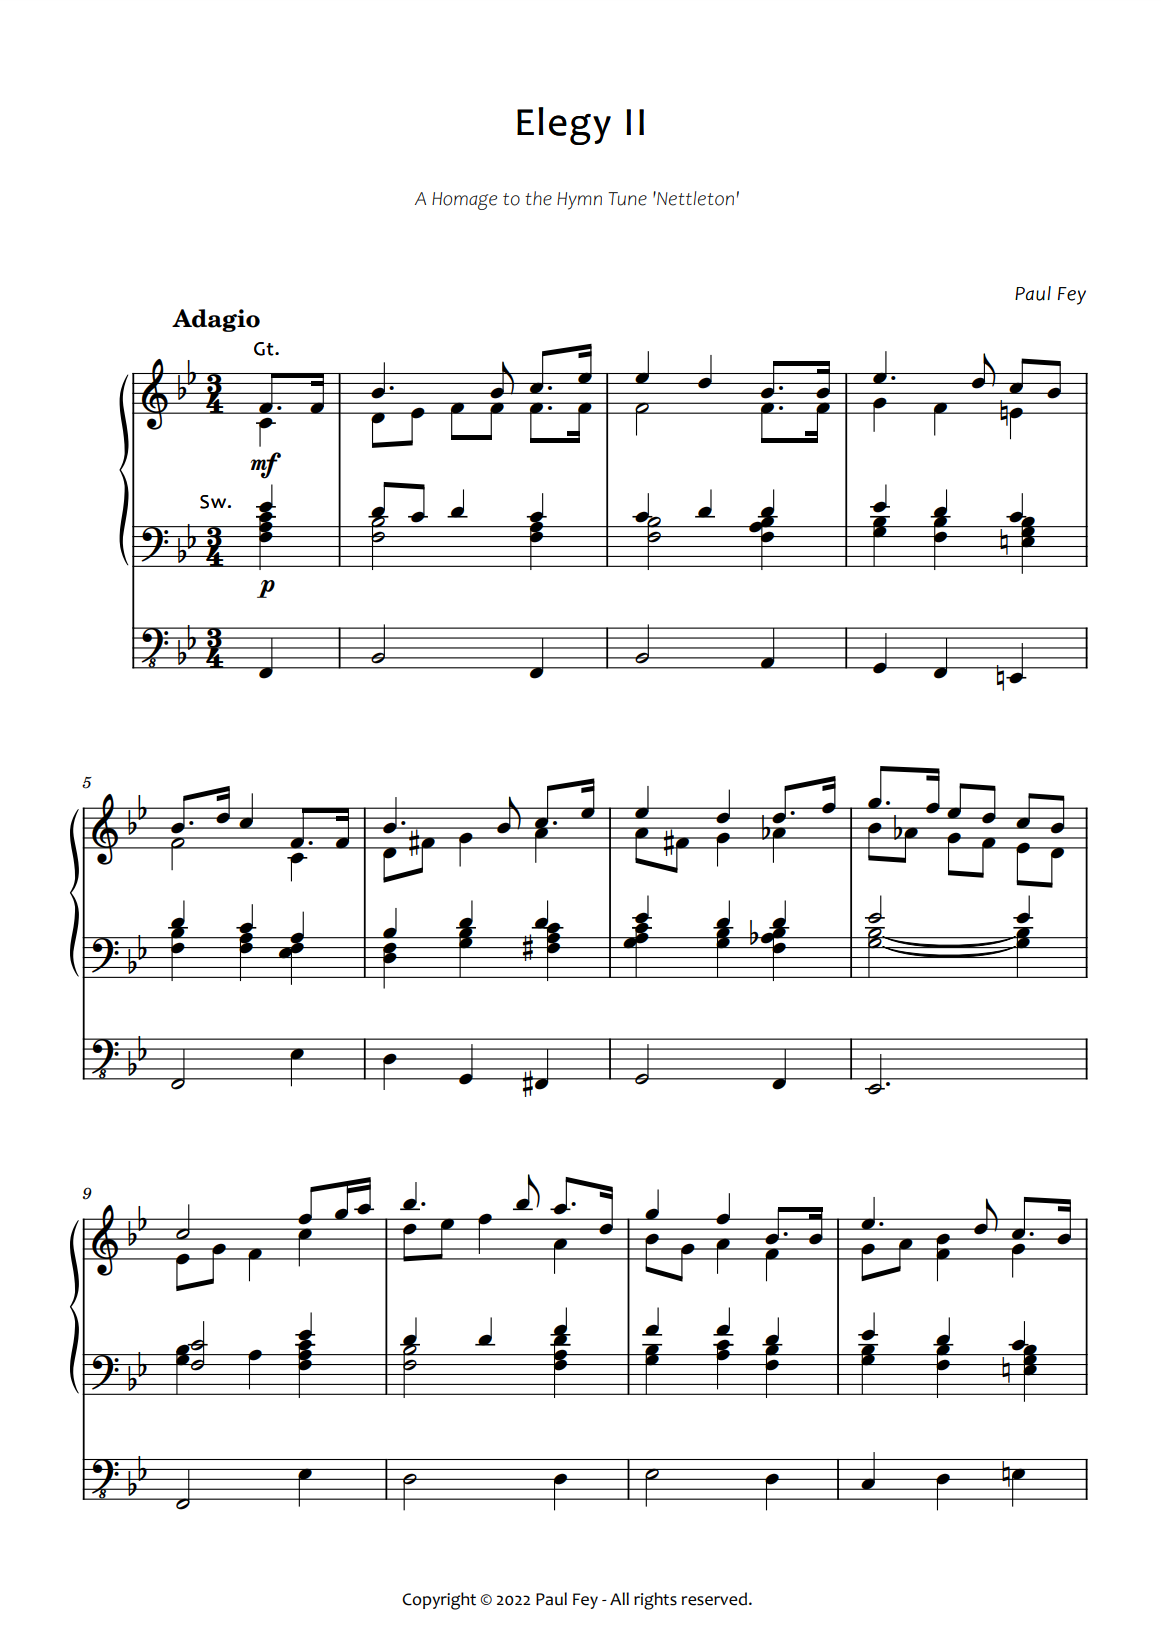 Elegy II for Organ (Sheet Music) - Music for Pipe Organ by Paul Fey